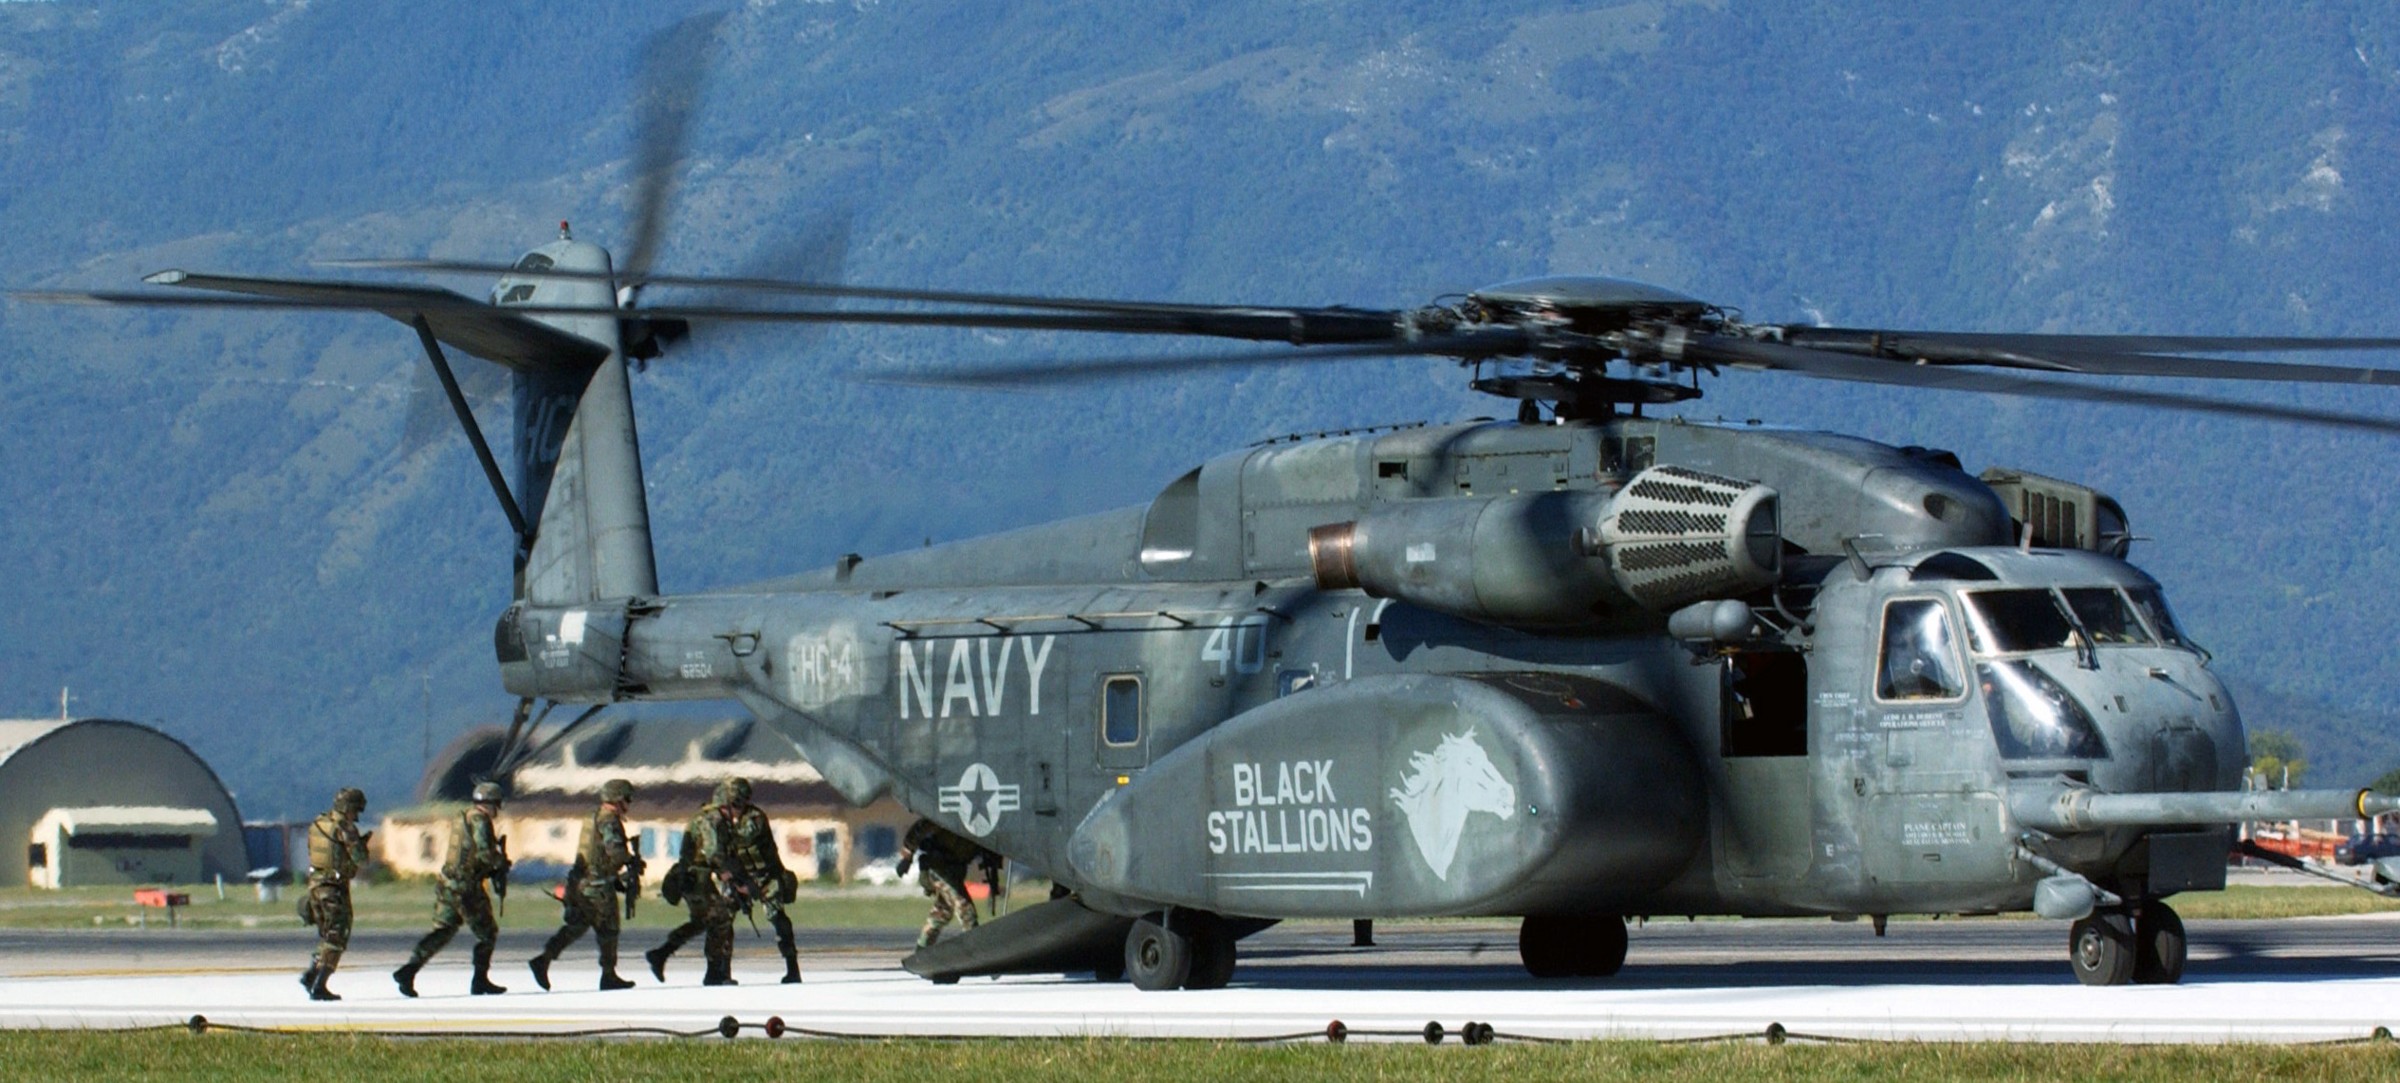 hc-4 black stallions helicopter combat support squadron mh-53e sea dragon 46 aviano airbase